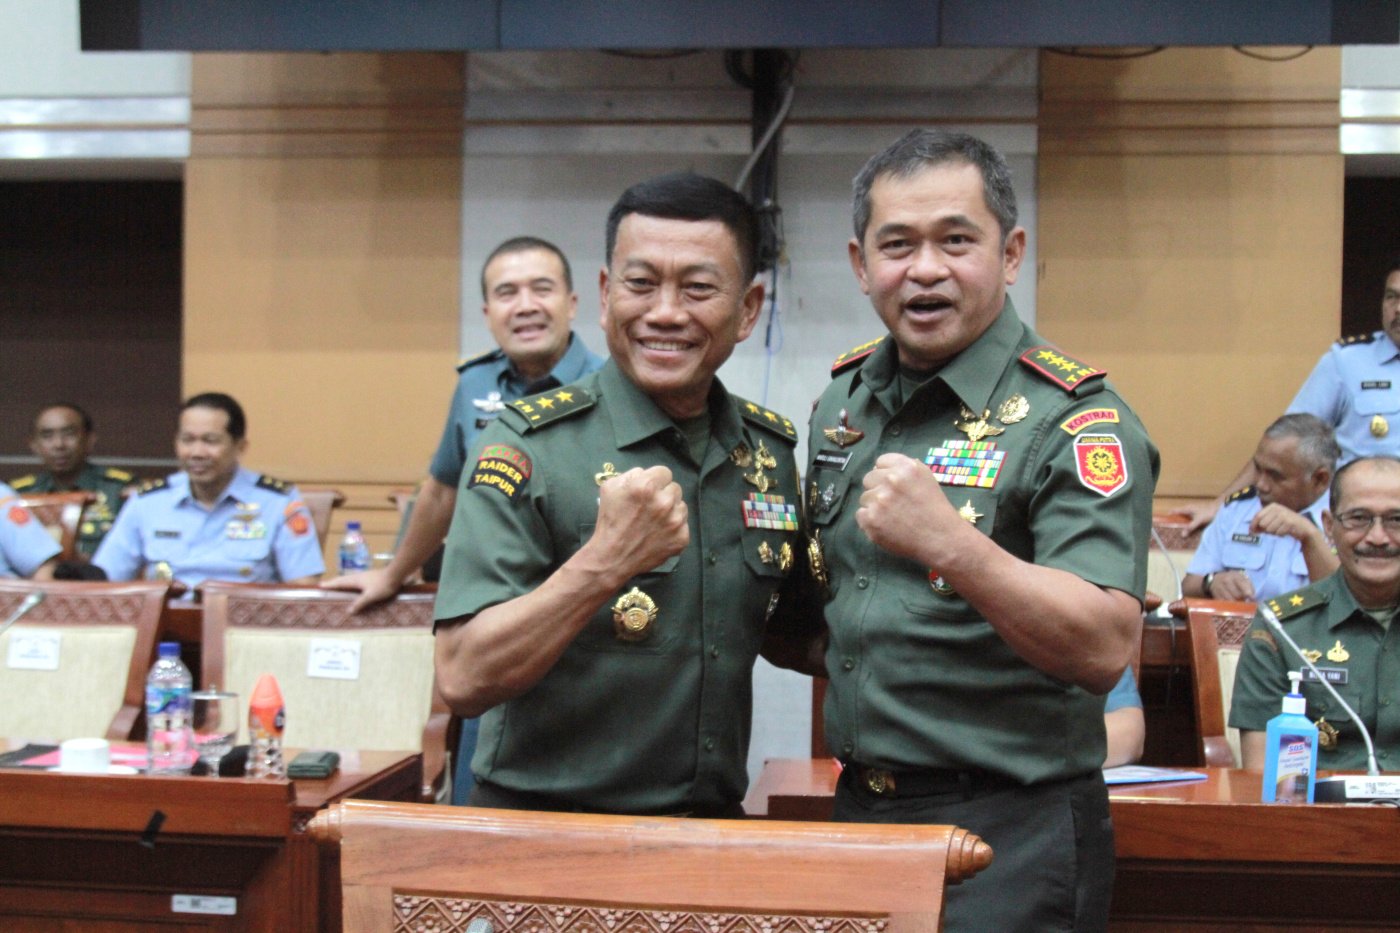 Komisi I DPR gelar raker dengan Panglima TNI, KASAL, WAKASAD, KASAU bahas situasi terkini keamanan Papua (Ashar/SinPo.id)